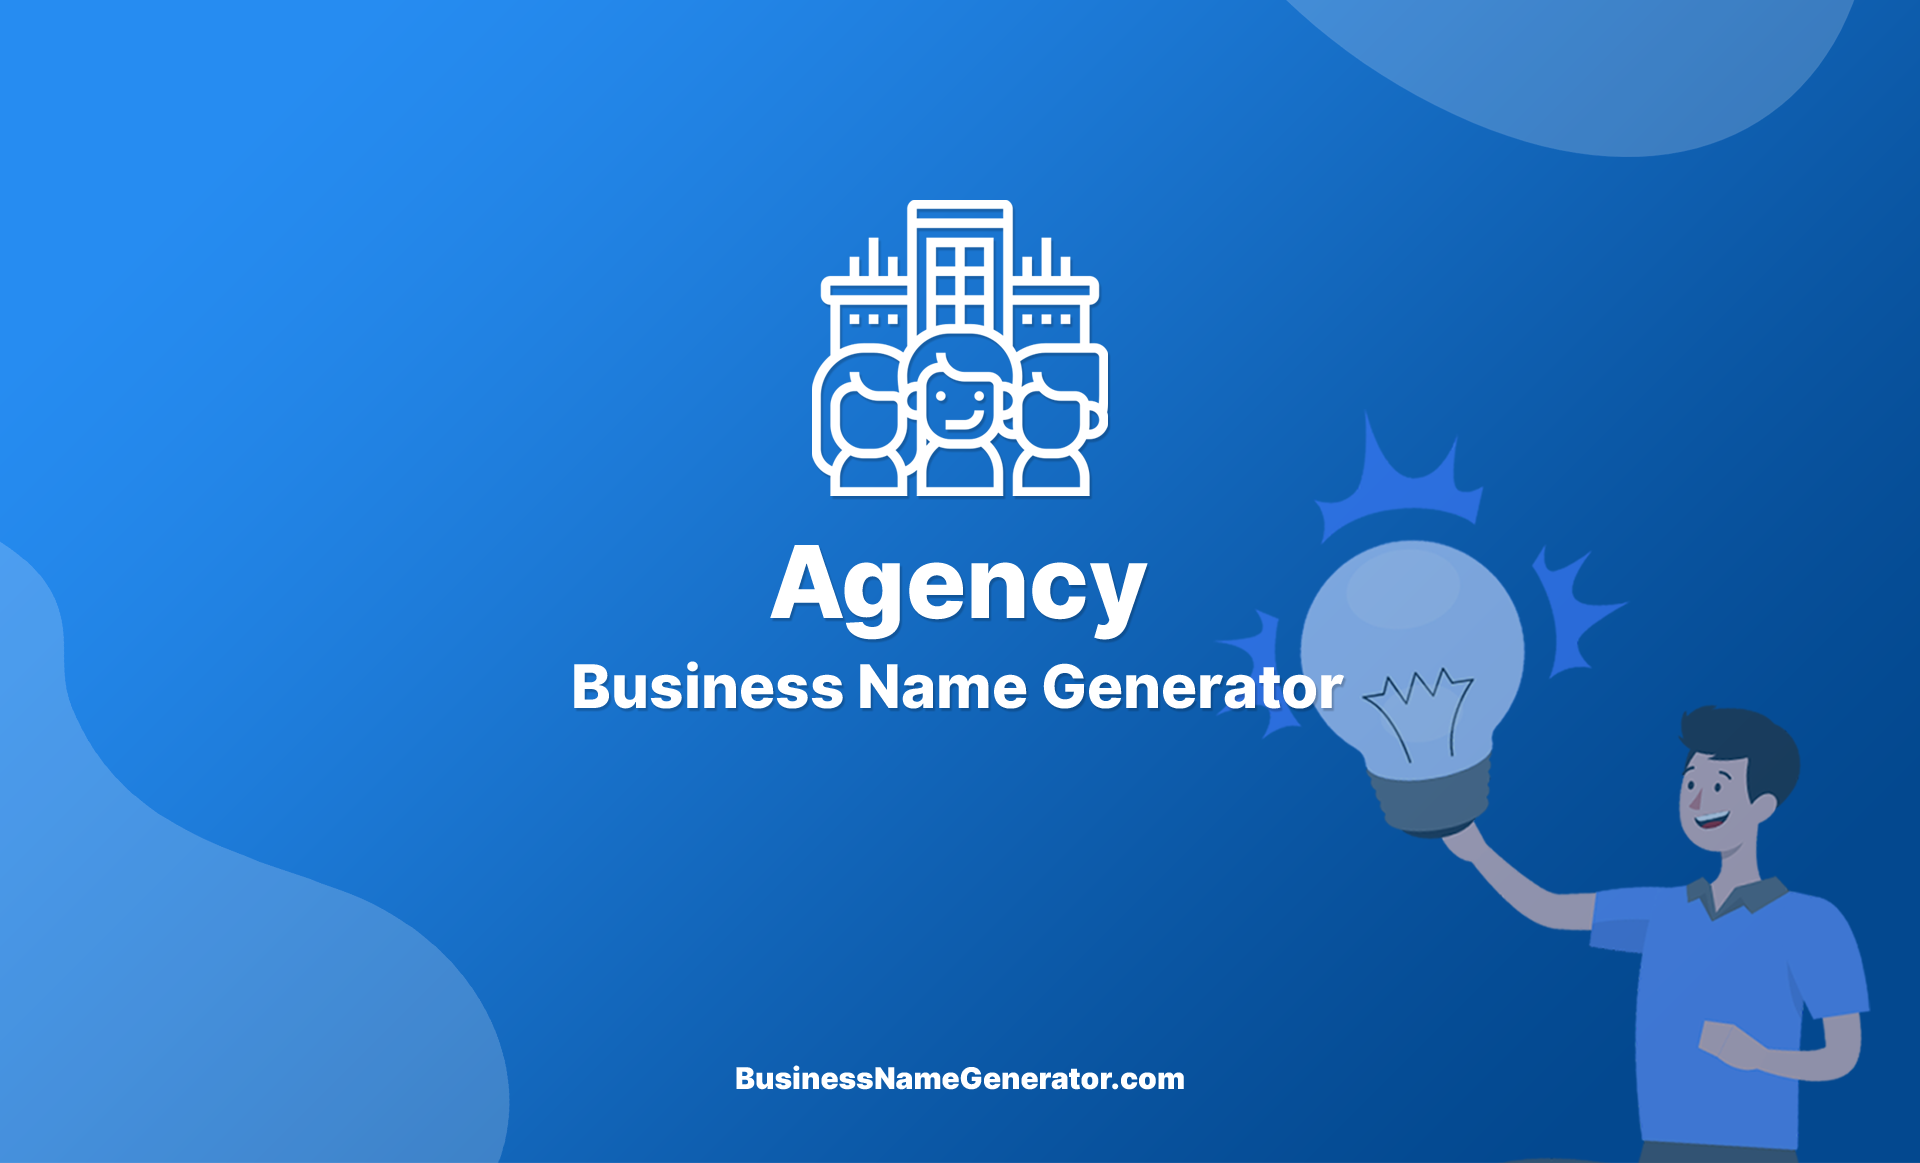 Agency Business Name Generator